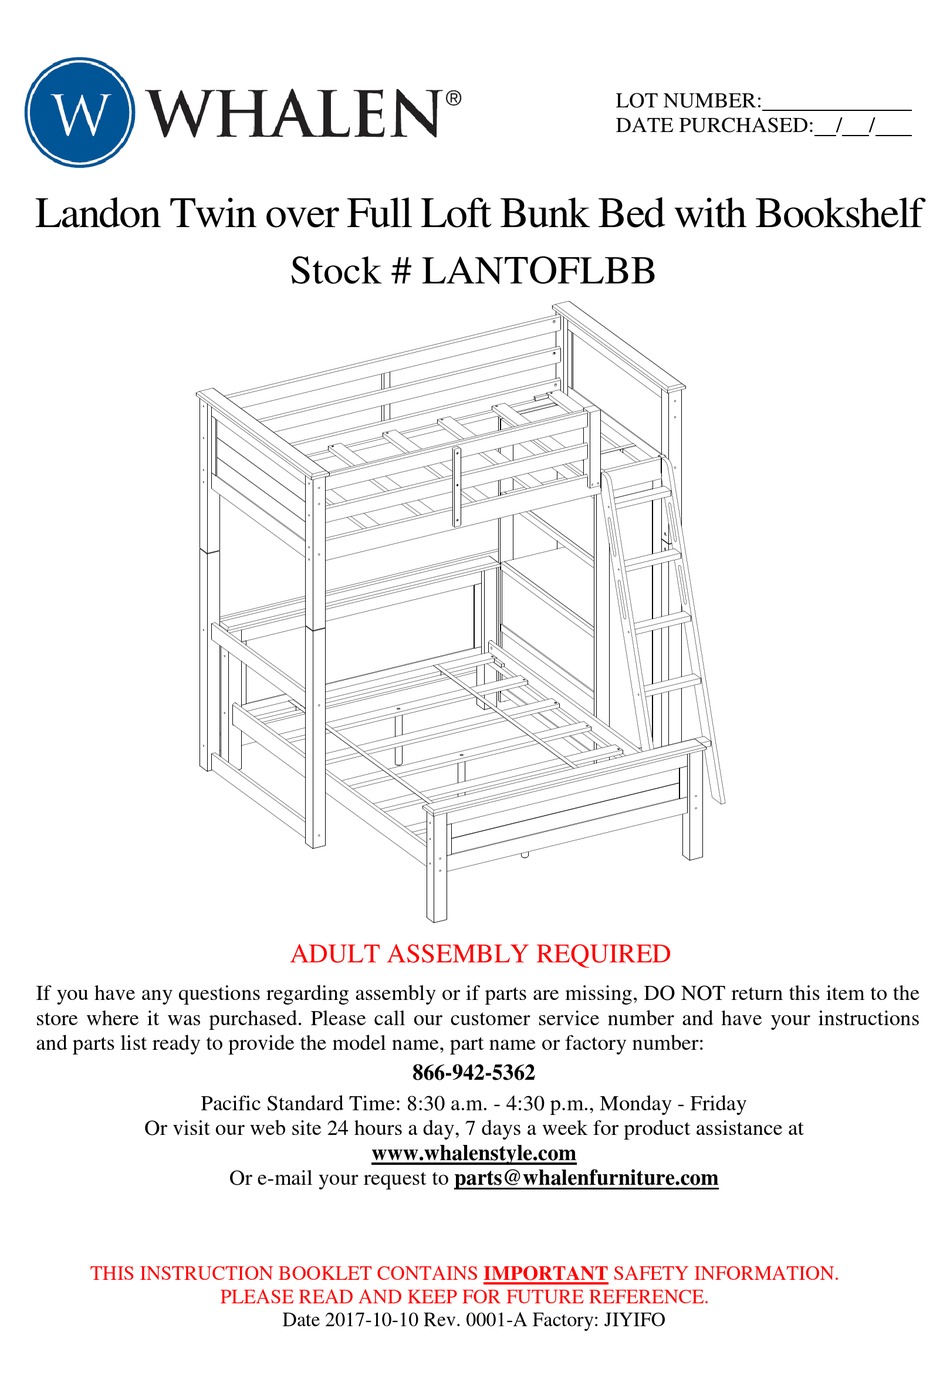 Whalen Lantoflbb Assembly Instructions, Highland Park Furniture Bunk Bed Instructions